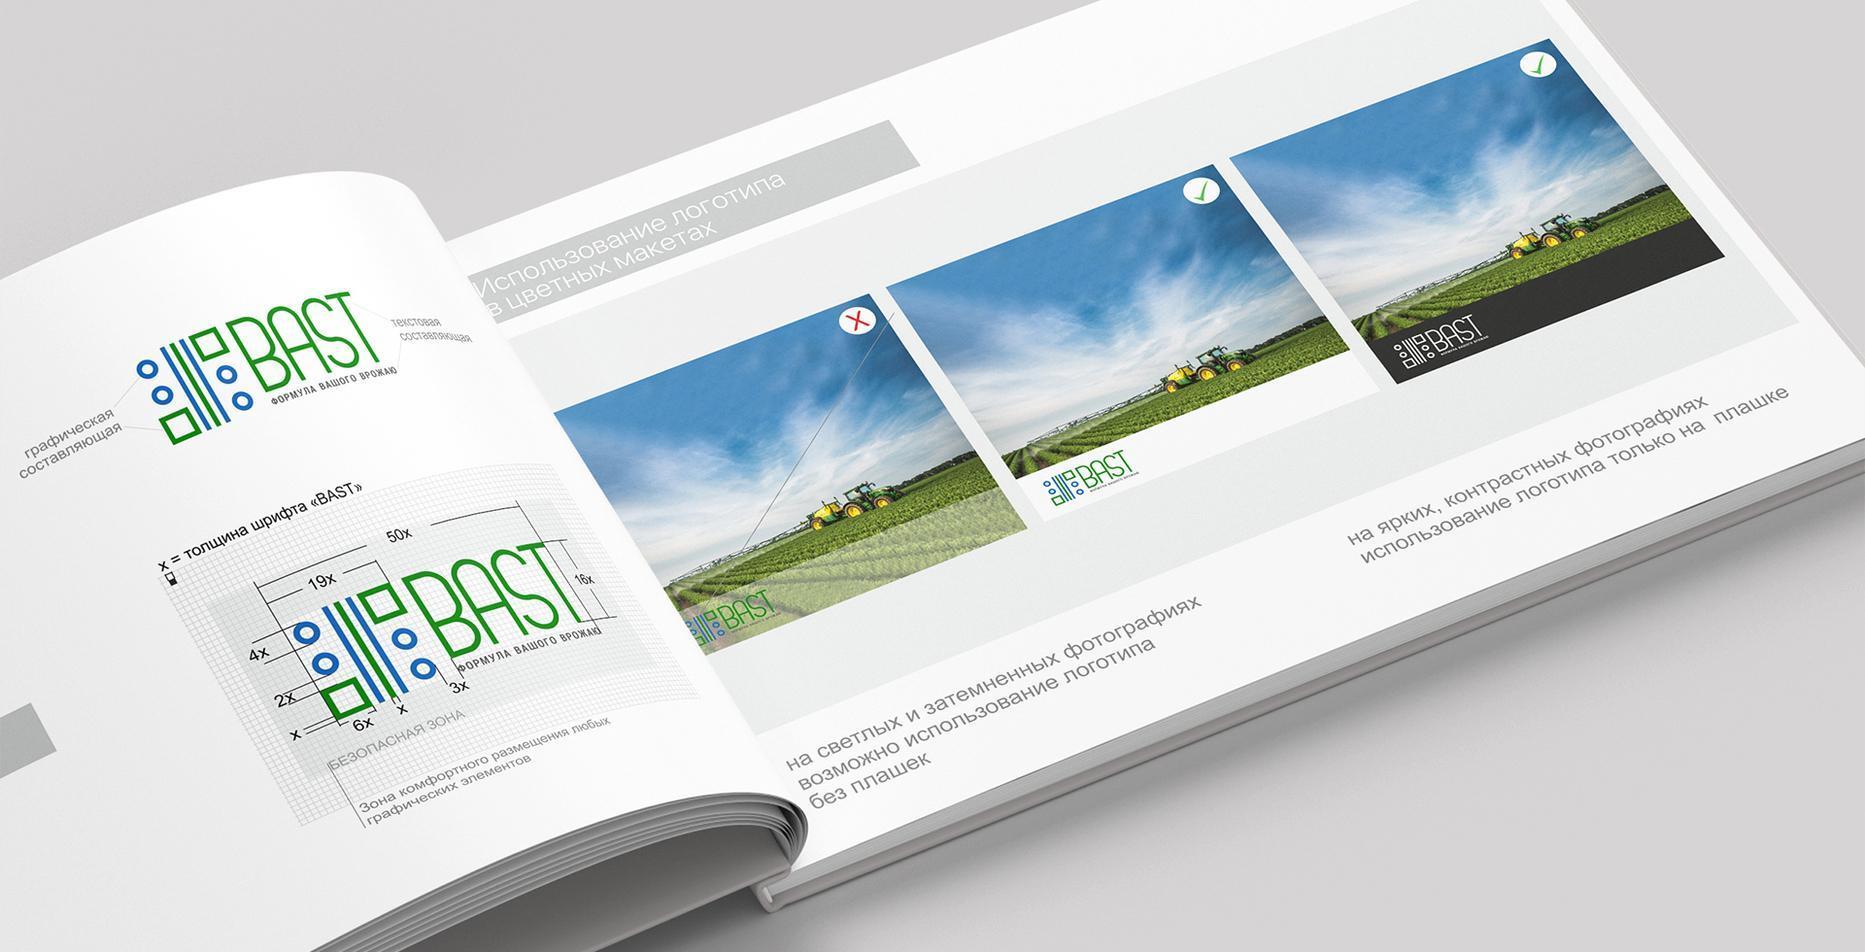 Case: website development, logo, video and branding for Bast — Rubarb - Image - 6